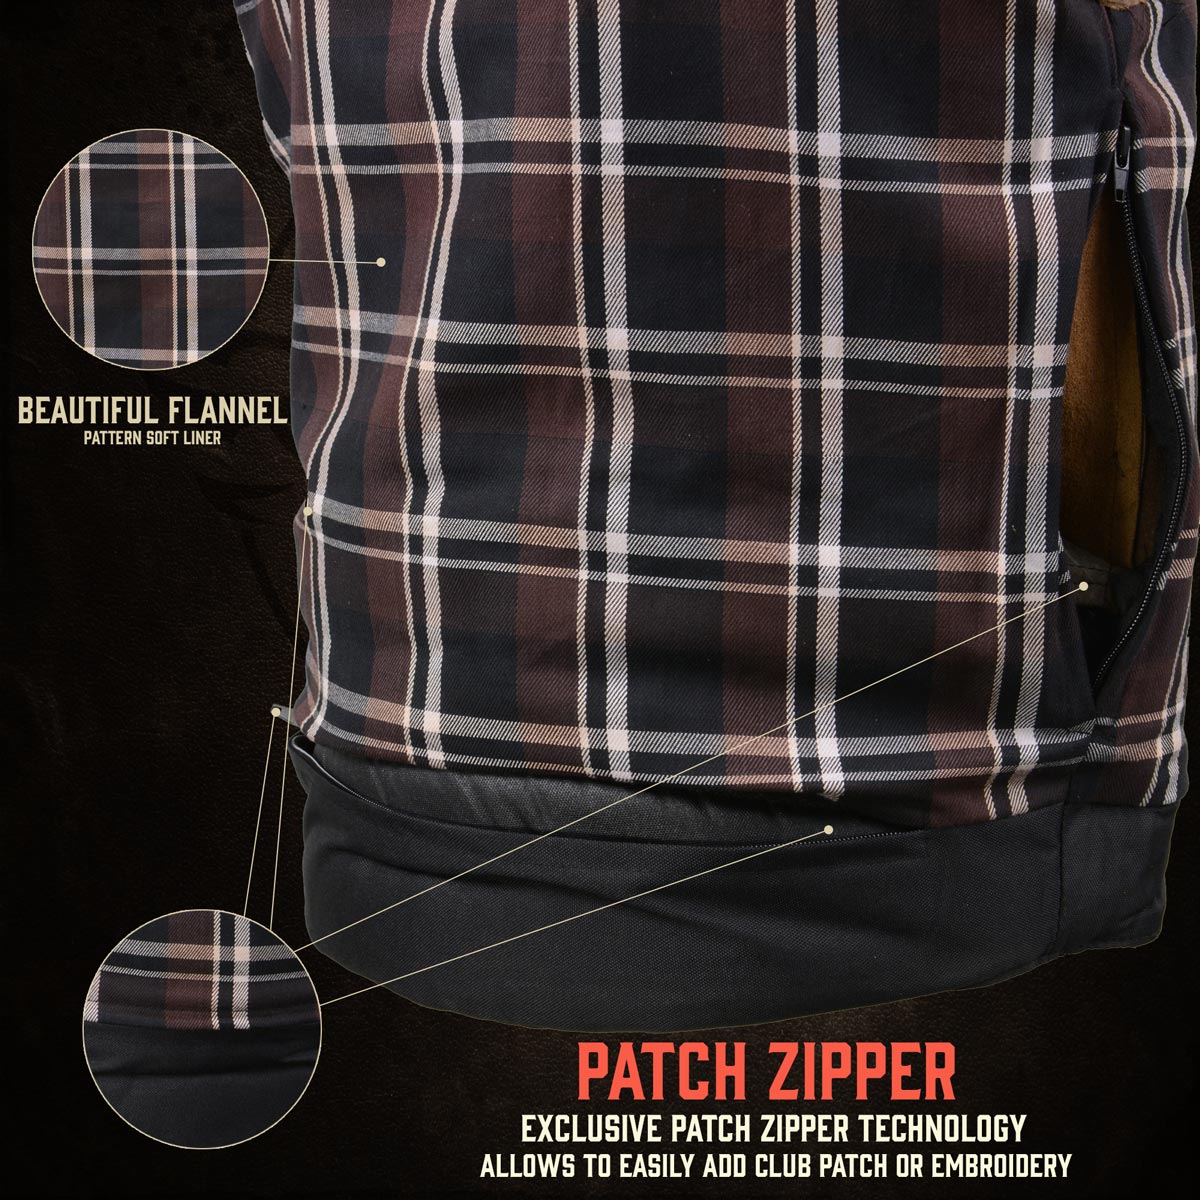 Men's 'Rustler' Vintage Crazy Horse Brown Leather Club Style Motorcycle Vest